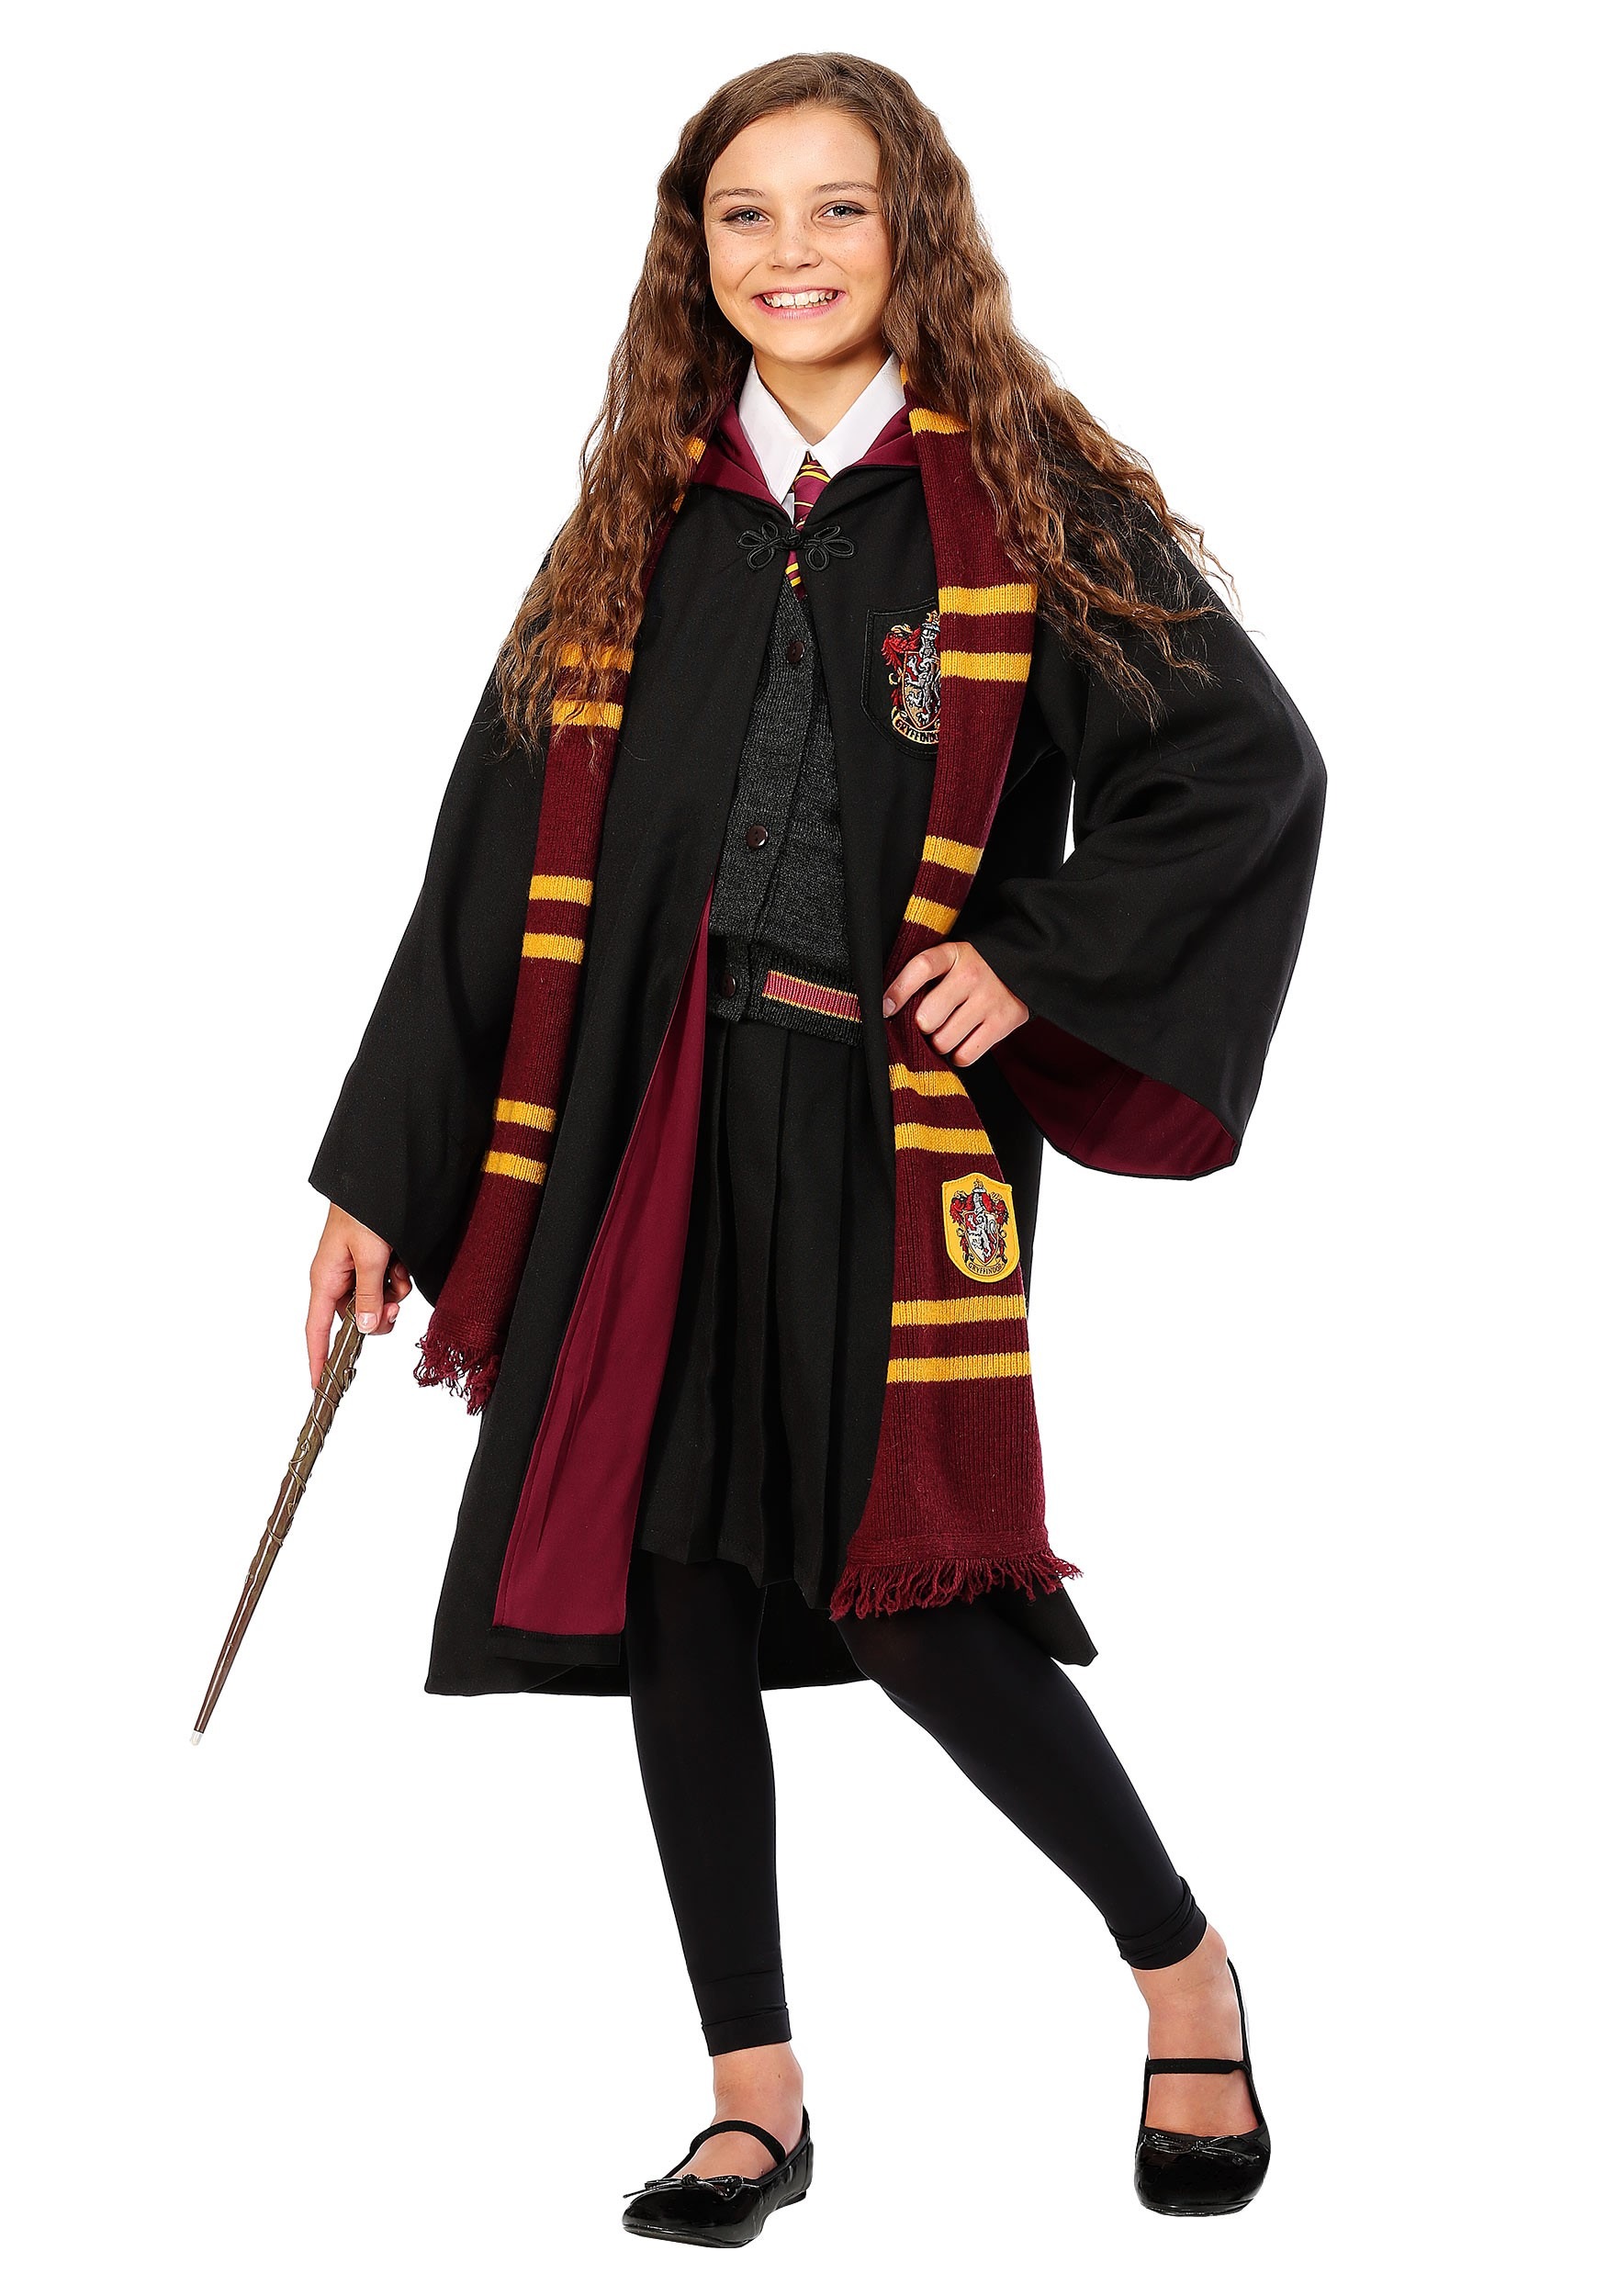 Deluxe Child Hermione Costume - Kid's Hermione Granger Costumes